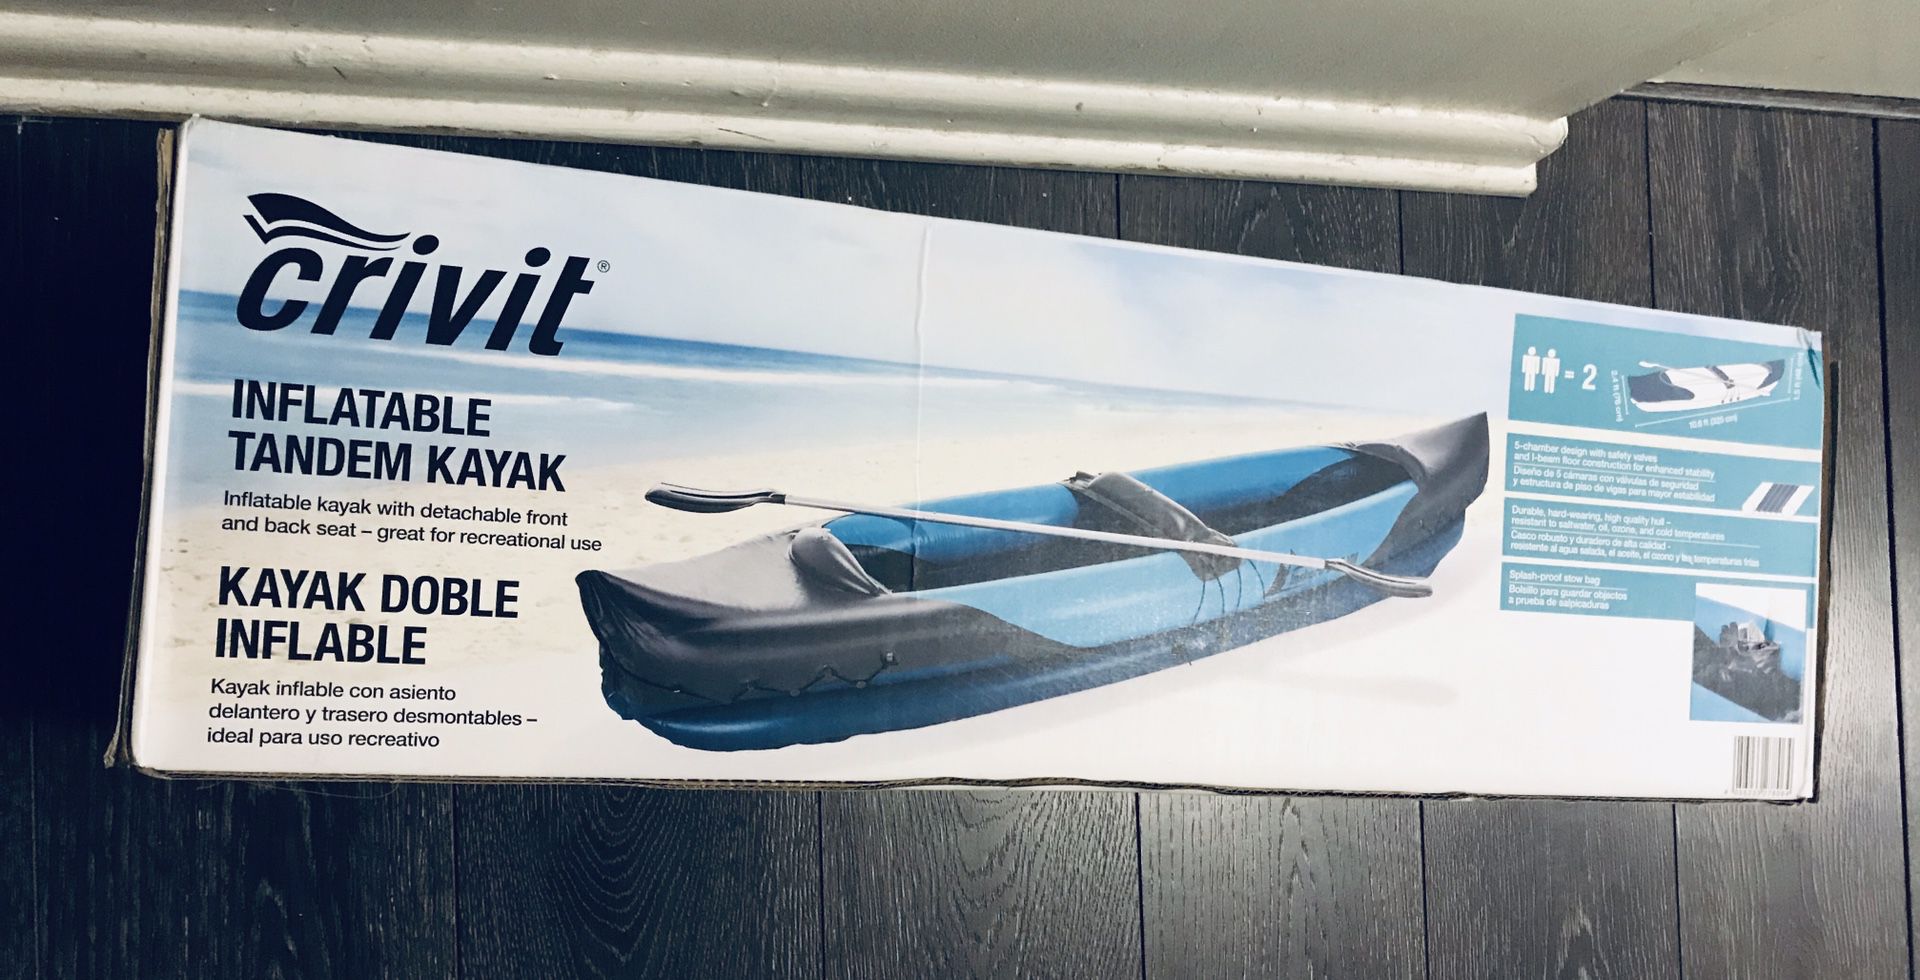 NEW KAYAK (Inflatable Tandem Kayak)